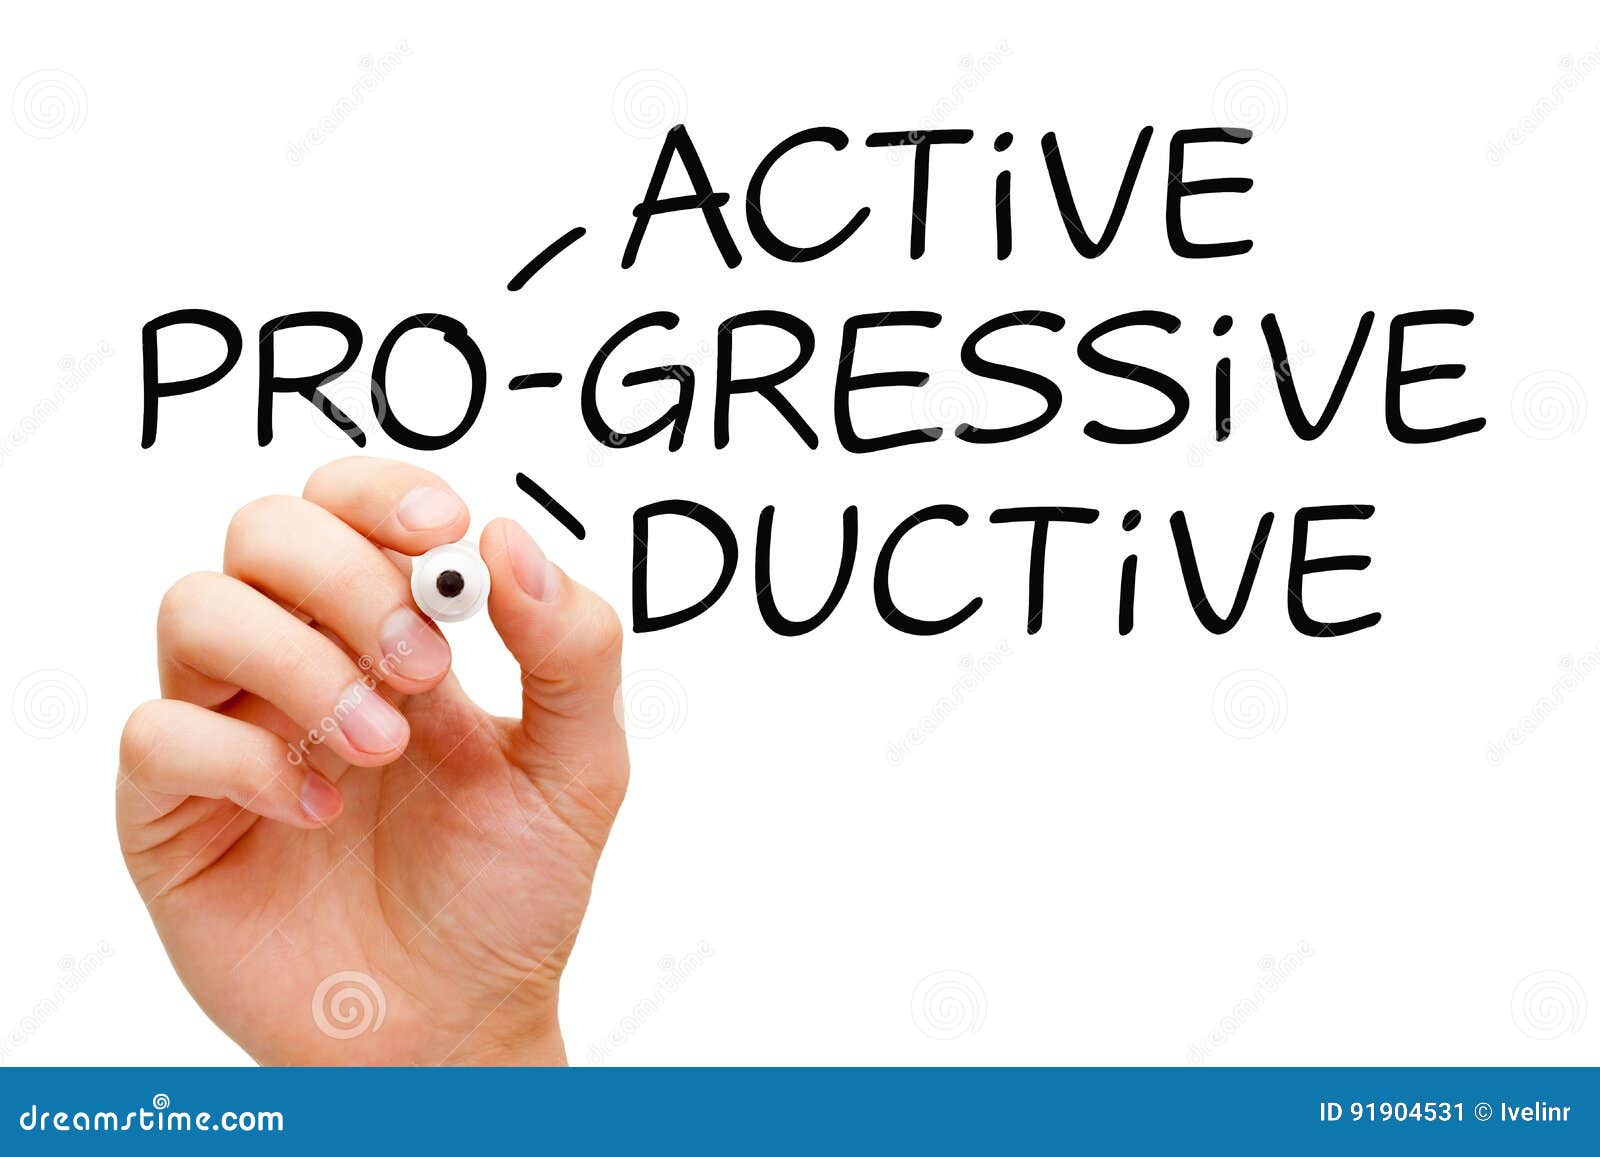 proactive progressive productive